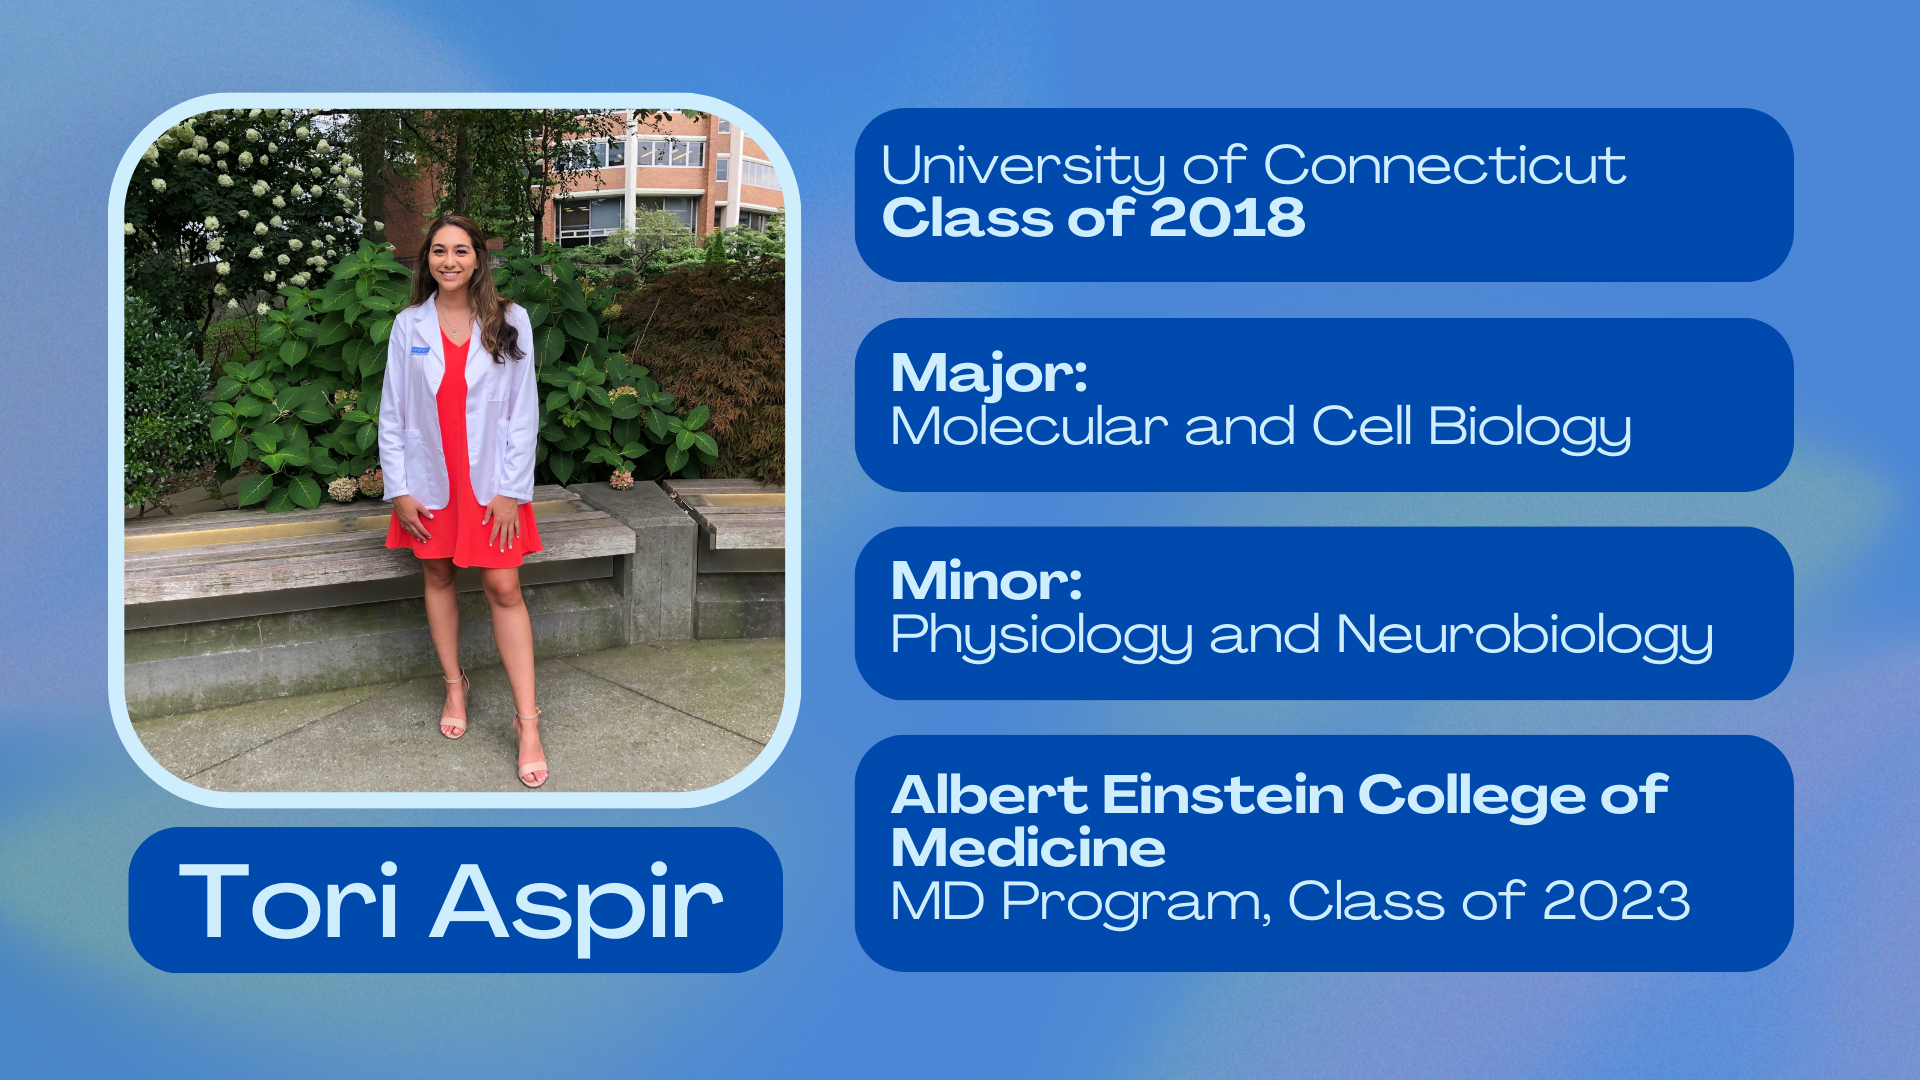 Tori AspirUniversity of Connecticut Class of 2018Major: Molecular and Cell BiologyMinor: Physiology and Neurobiology; Albert Einstein College of Medicine, MD Program class of 2023